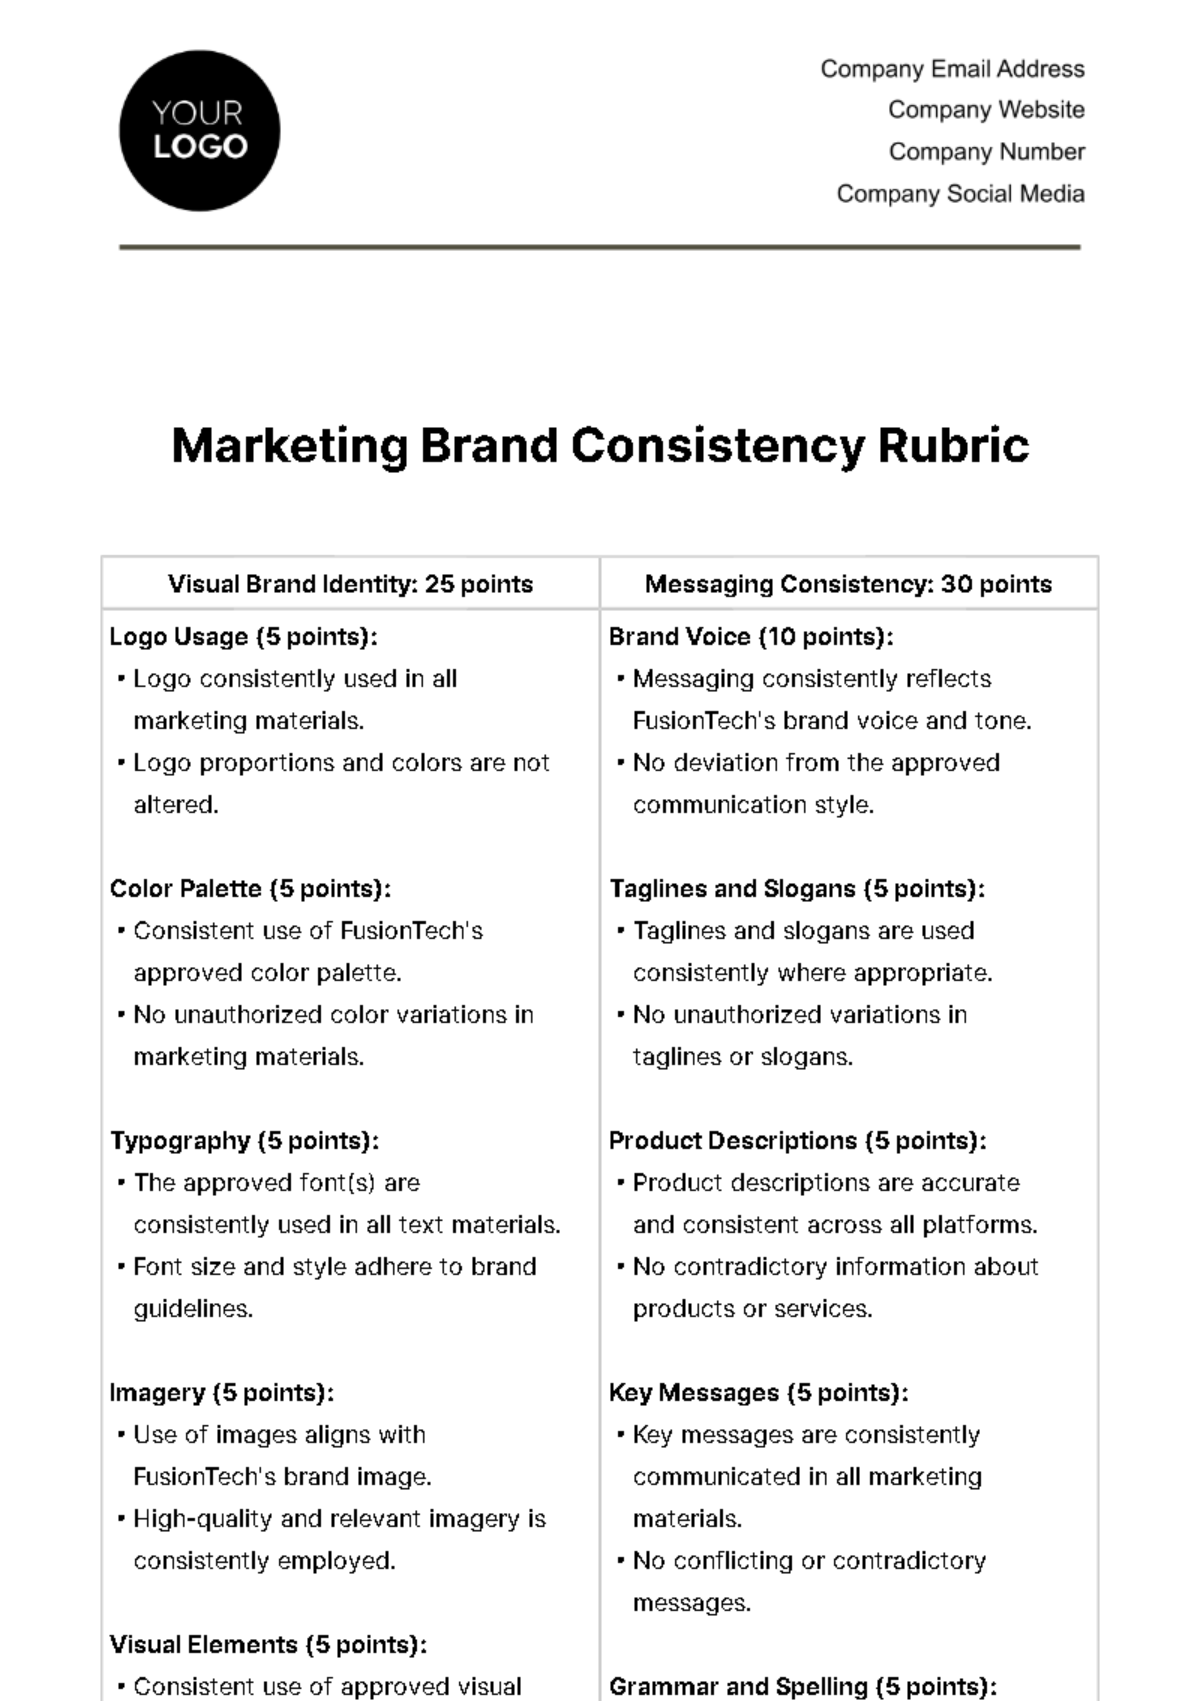 Free Marketing Brand Consistency Rubric Template